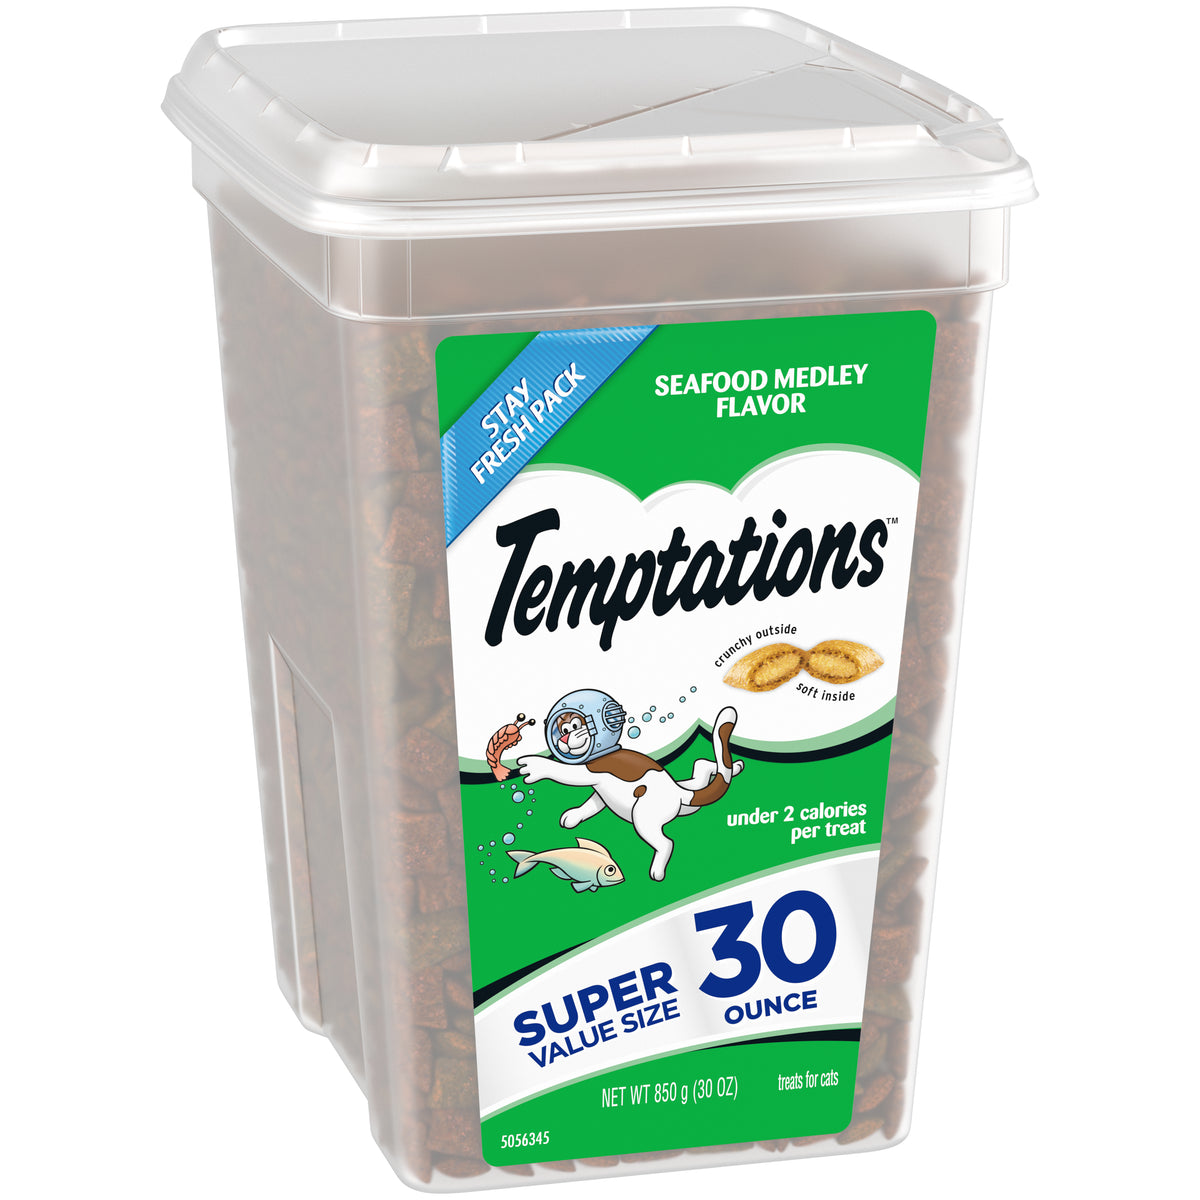 [Temptations][TEMPTATIONS Classic Cat Treats, Seafood Medley Flavor, 30 oz. Tub][Image Center Left (3/4 Angle)]